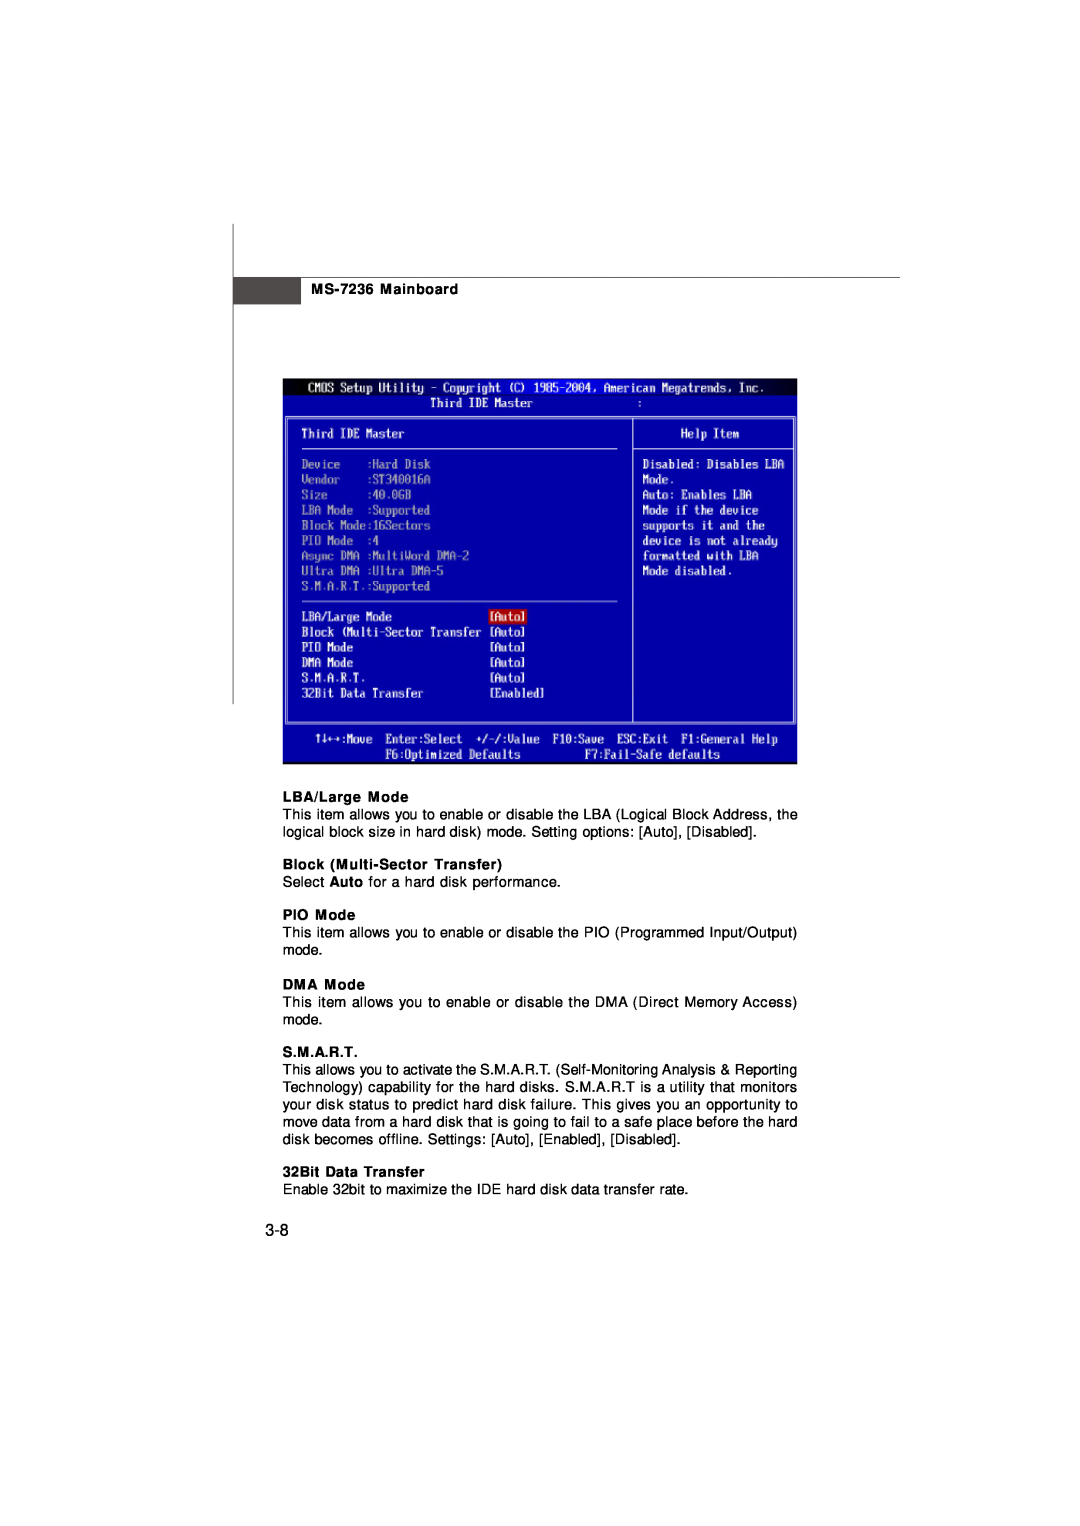 IBM G52-72361X2 manual MS-7236 Mainboard LBA/Large Mode, Block Multi-Sector Transfer, PIO Mode, DMA Mode, S.M.A.R.T 